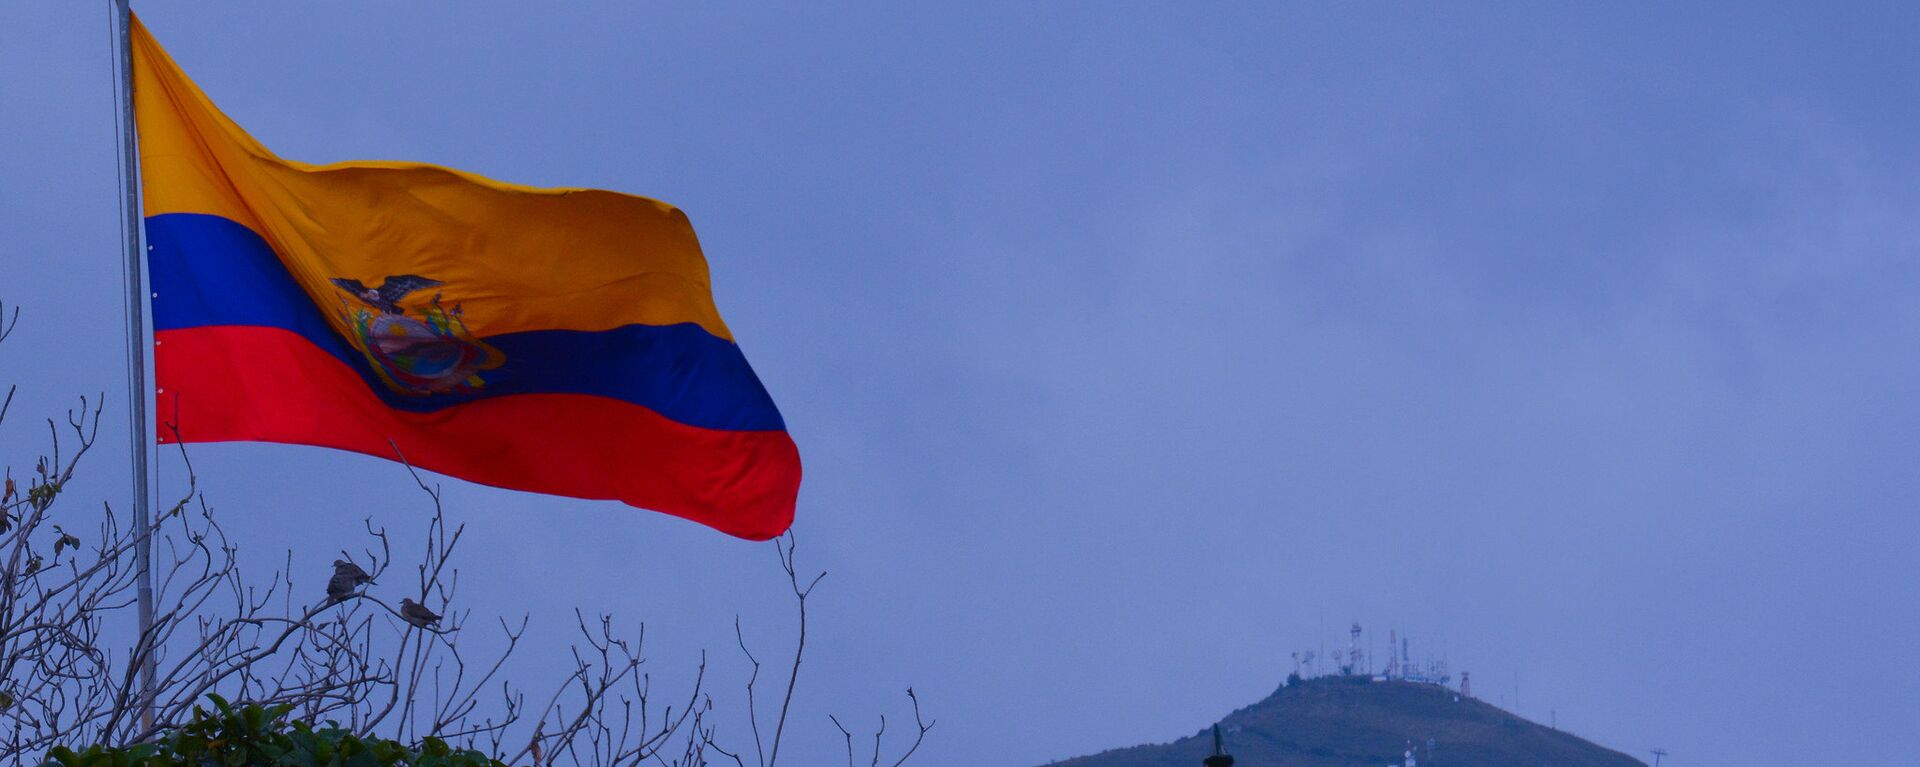 La bandera de Ecuador - Sputnik Mundo, 1920, 23.07.2019